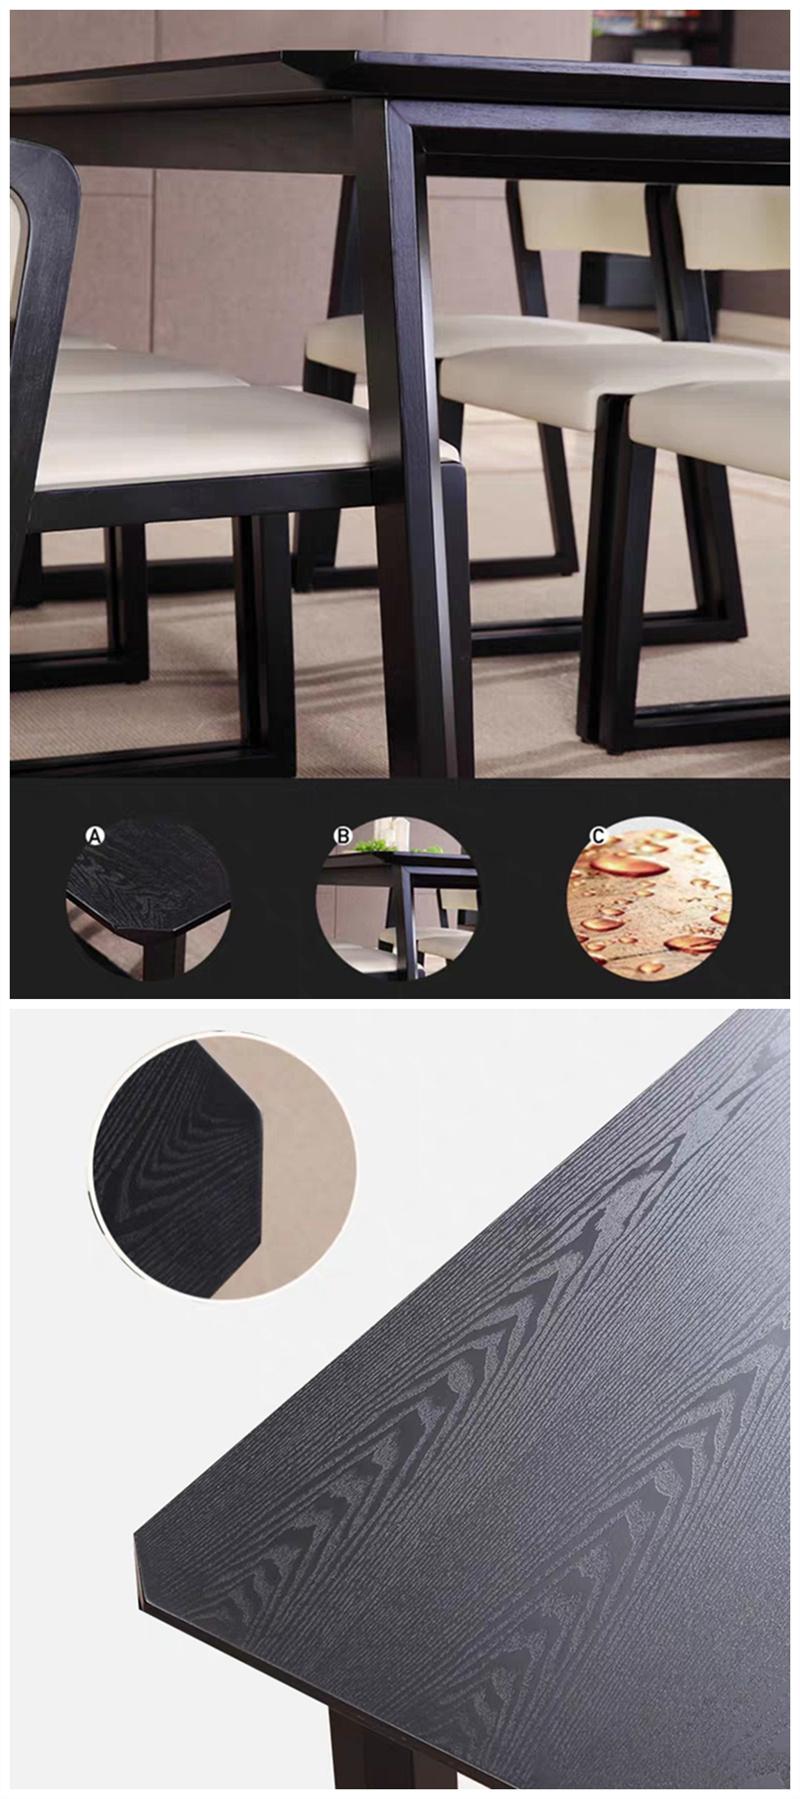 Wooden Dining Table Big Rectangular Teak Wood with Black Legs Dining Room Furniture Sets